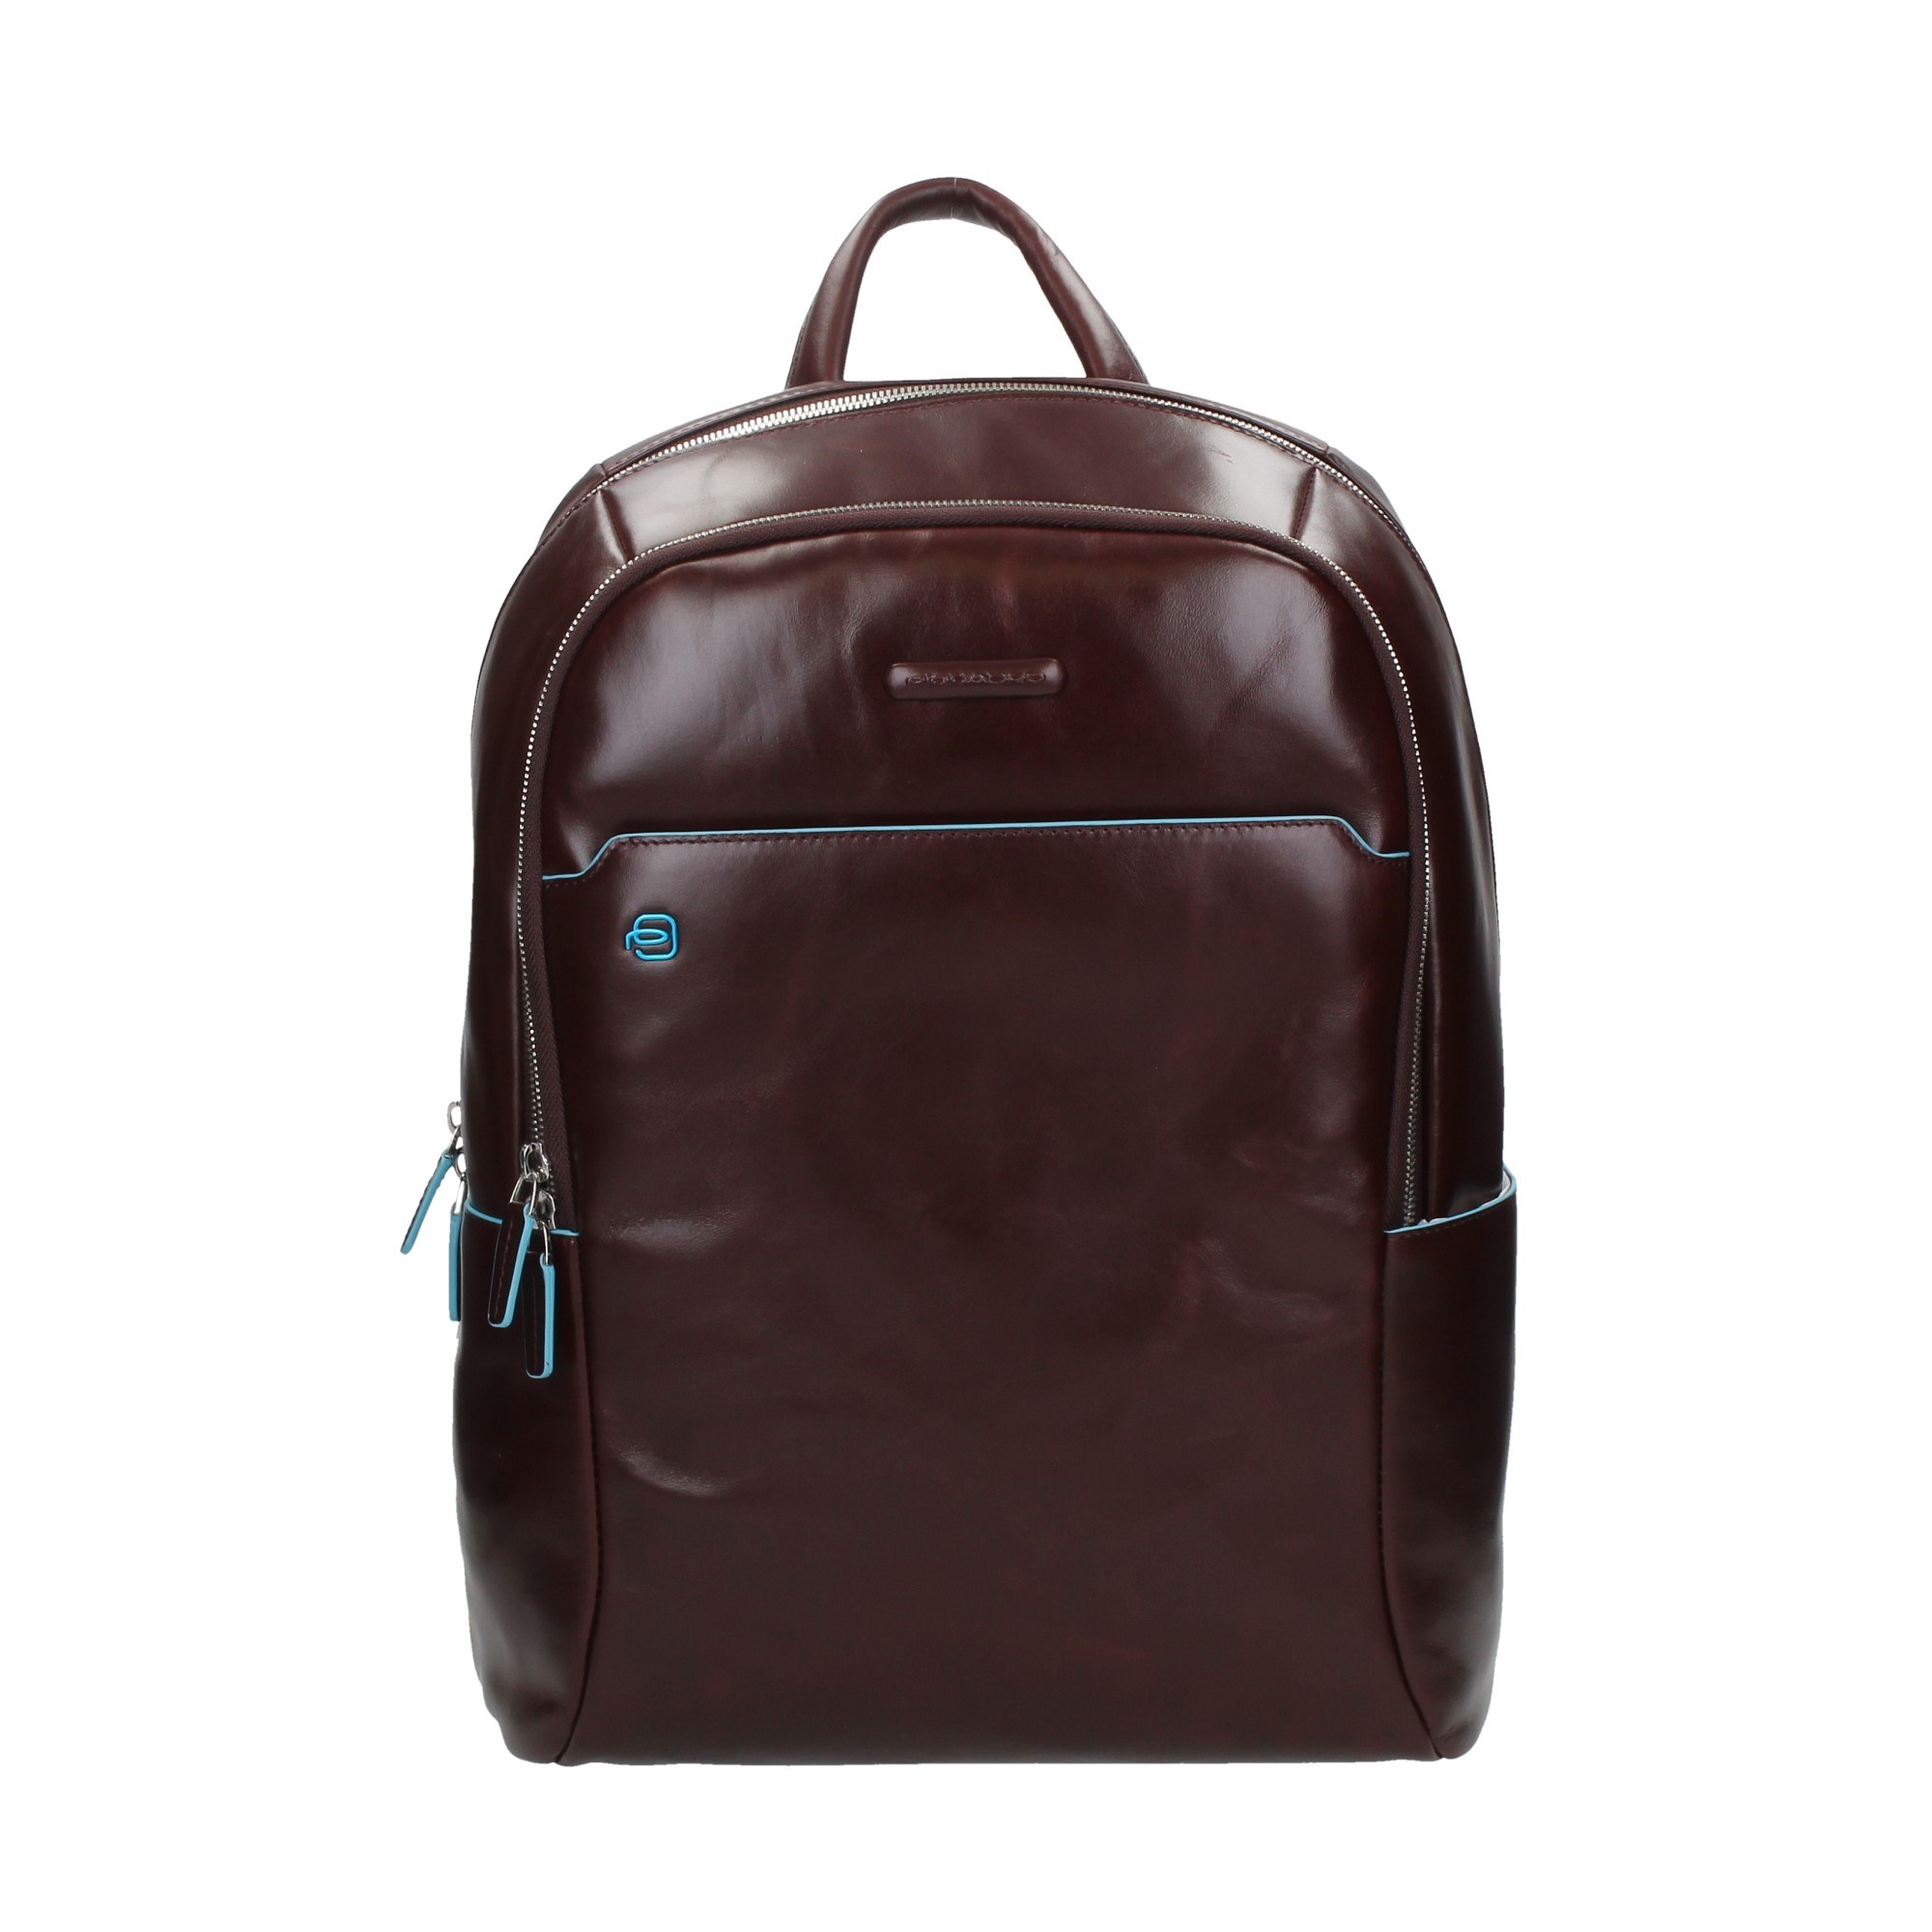 Piquadro. Accessories Man Backpack CA4762B2/MO